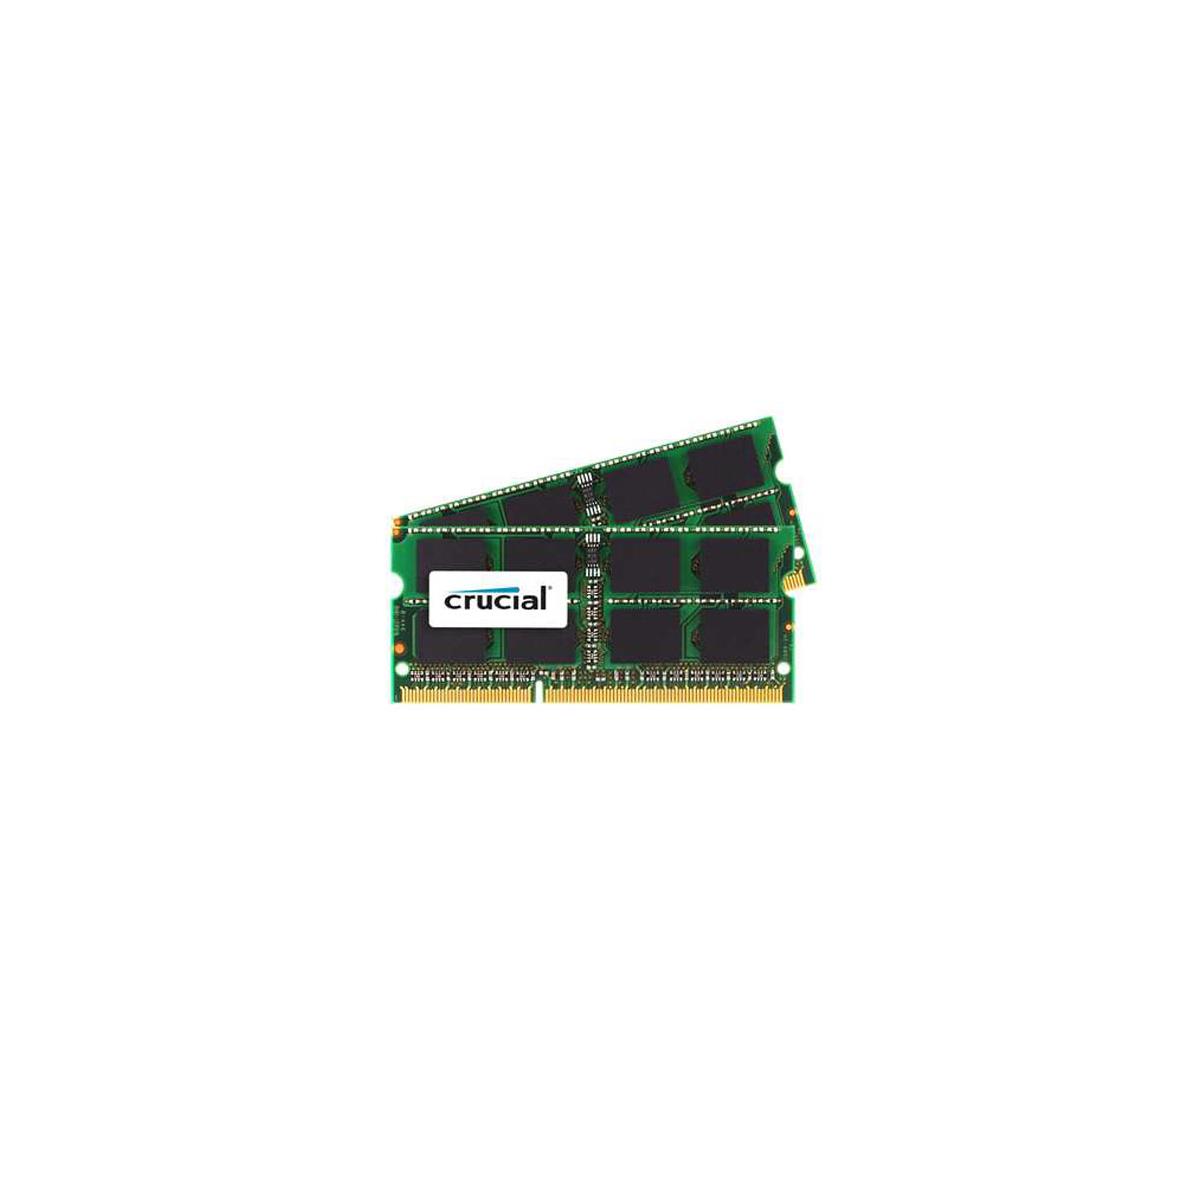 Image of Crucial 8GB (2x4GB) 204-pin SODIMM DDR3 PC3-10600 Memory Module Kit for Mac